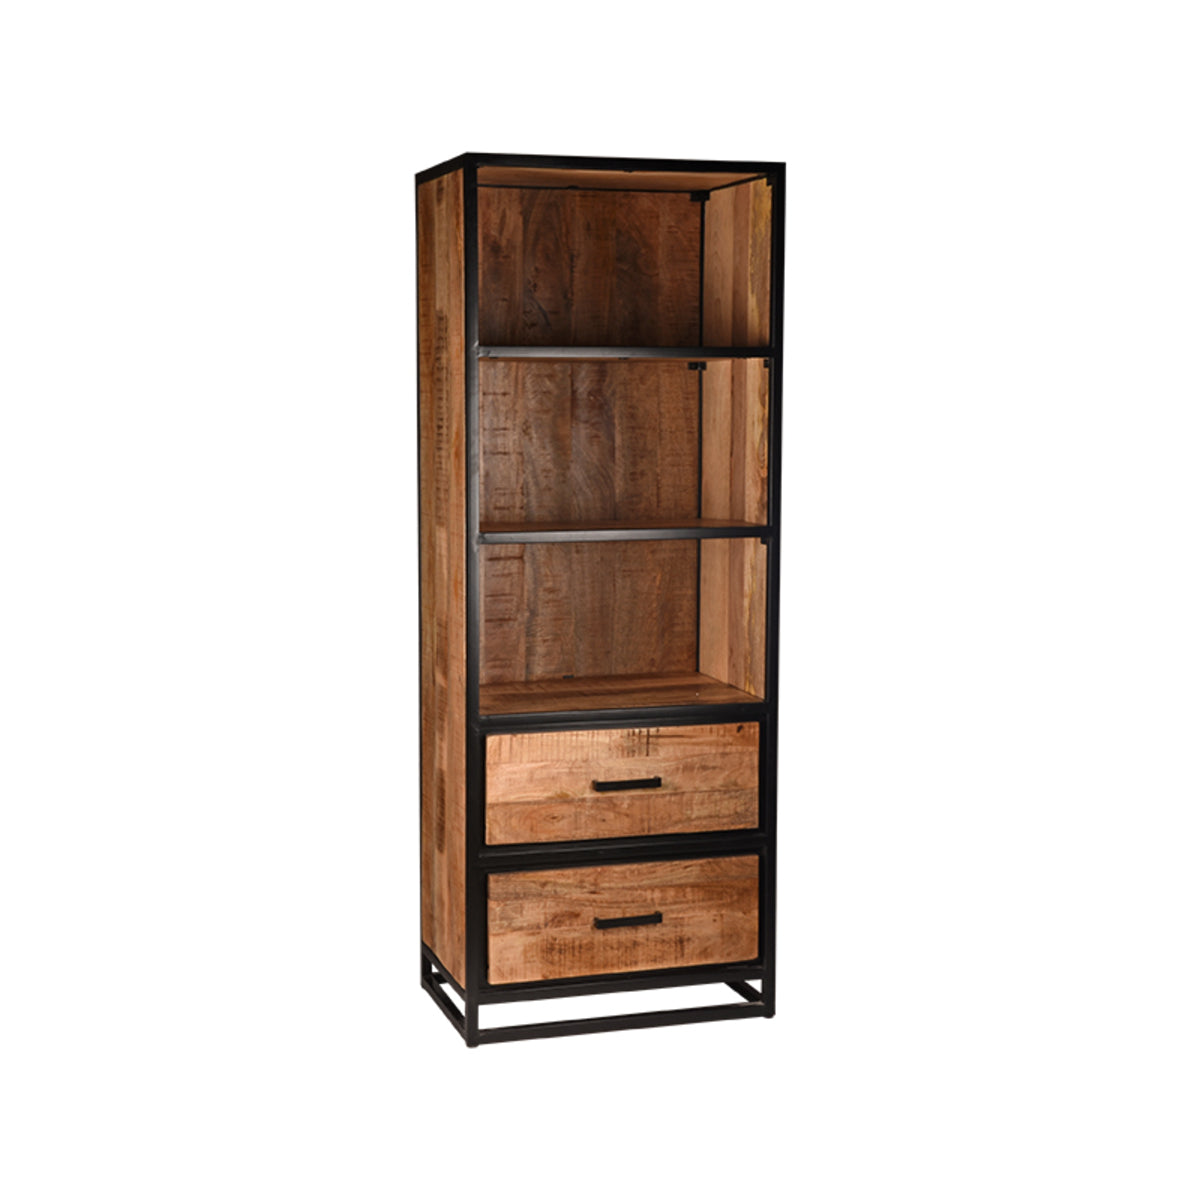 LABEL51 Bookcase Tampa - Rough - Mango wood